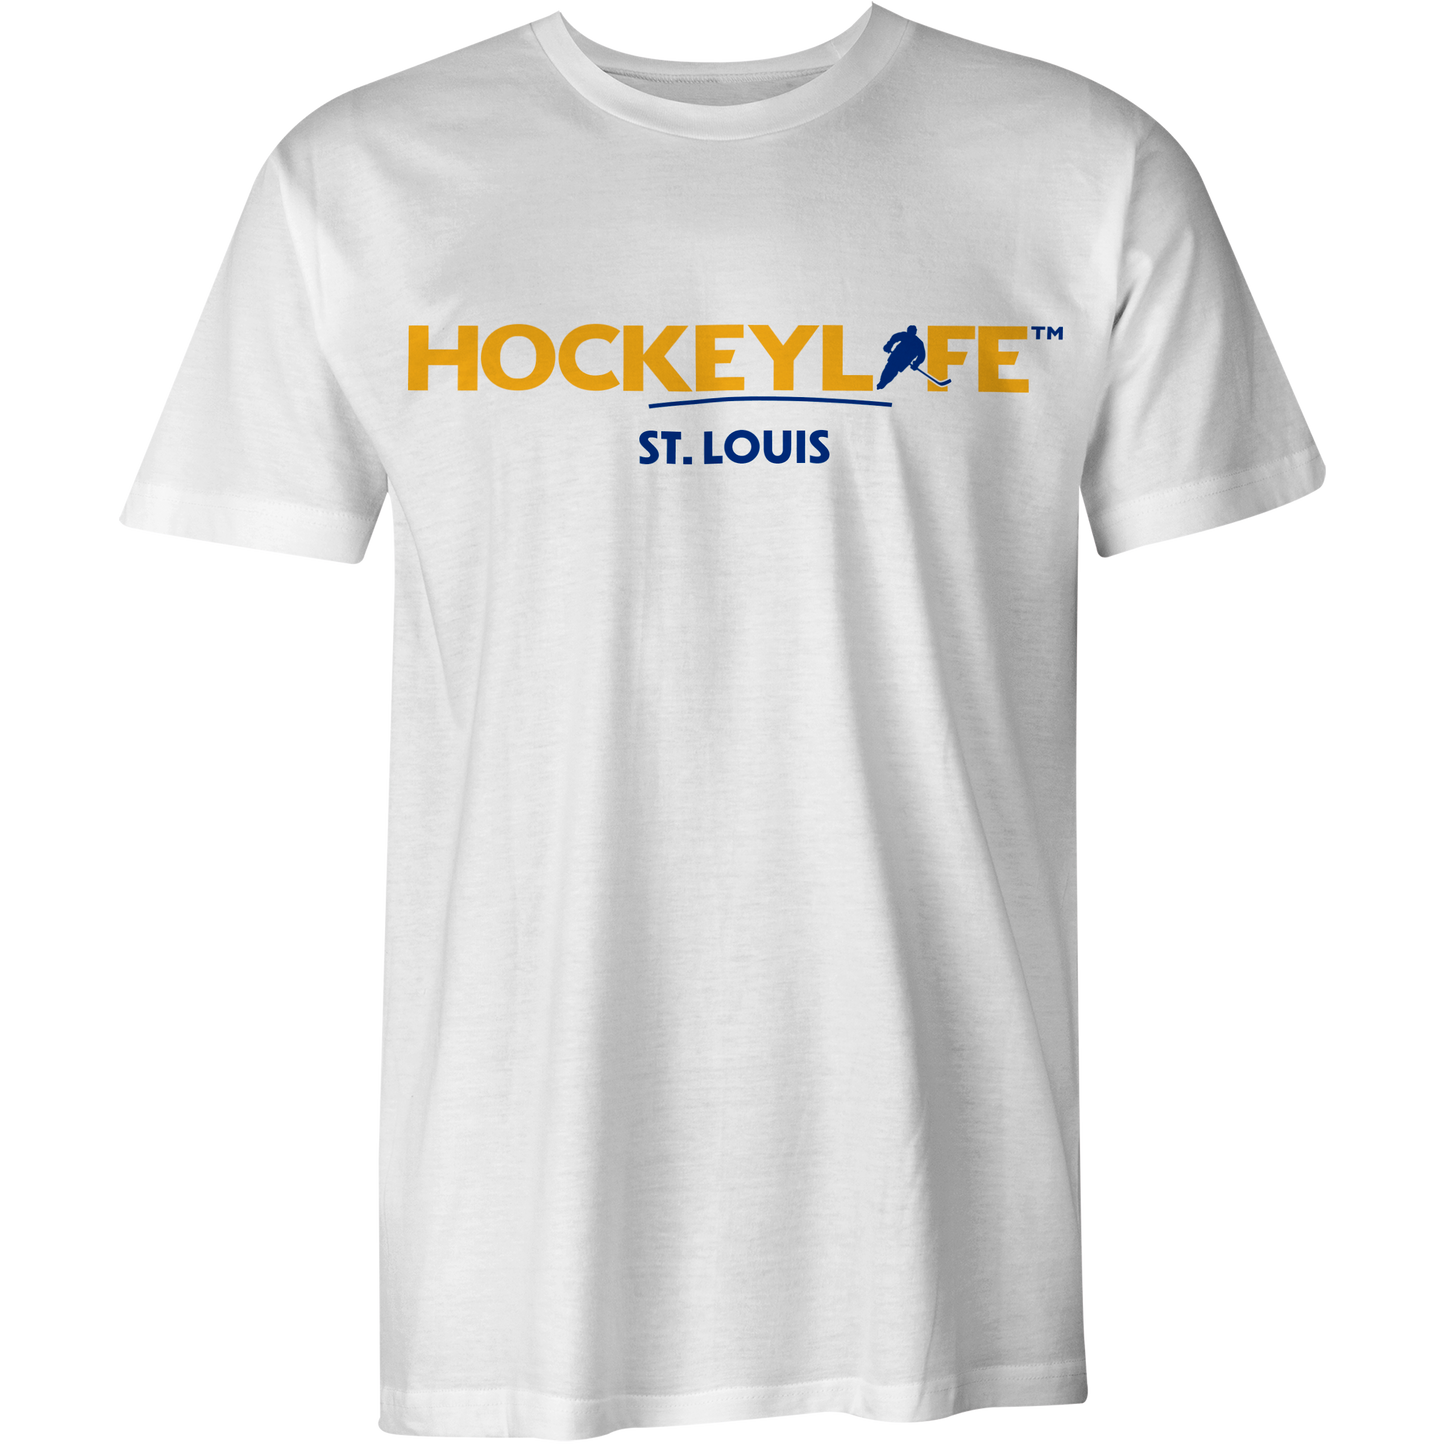 HockeyLife St. Louis Tee Shirt